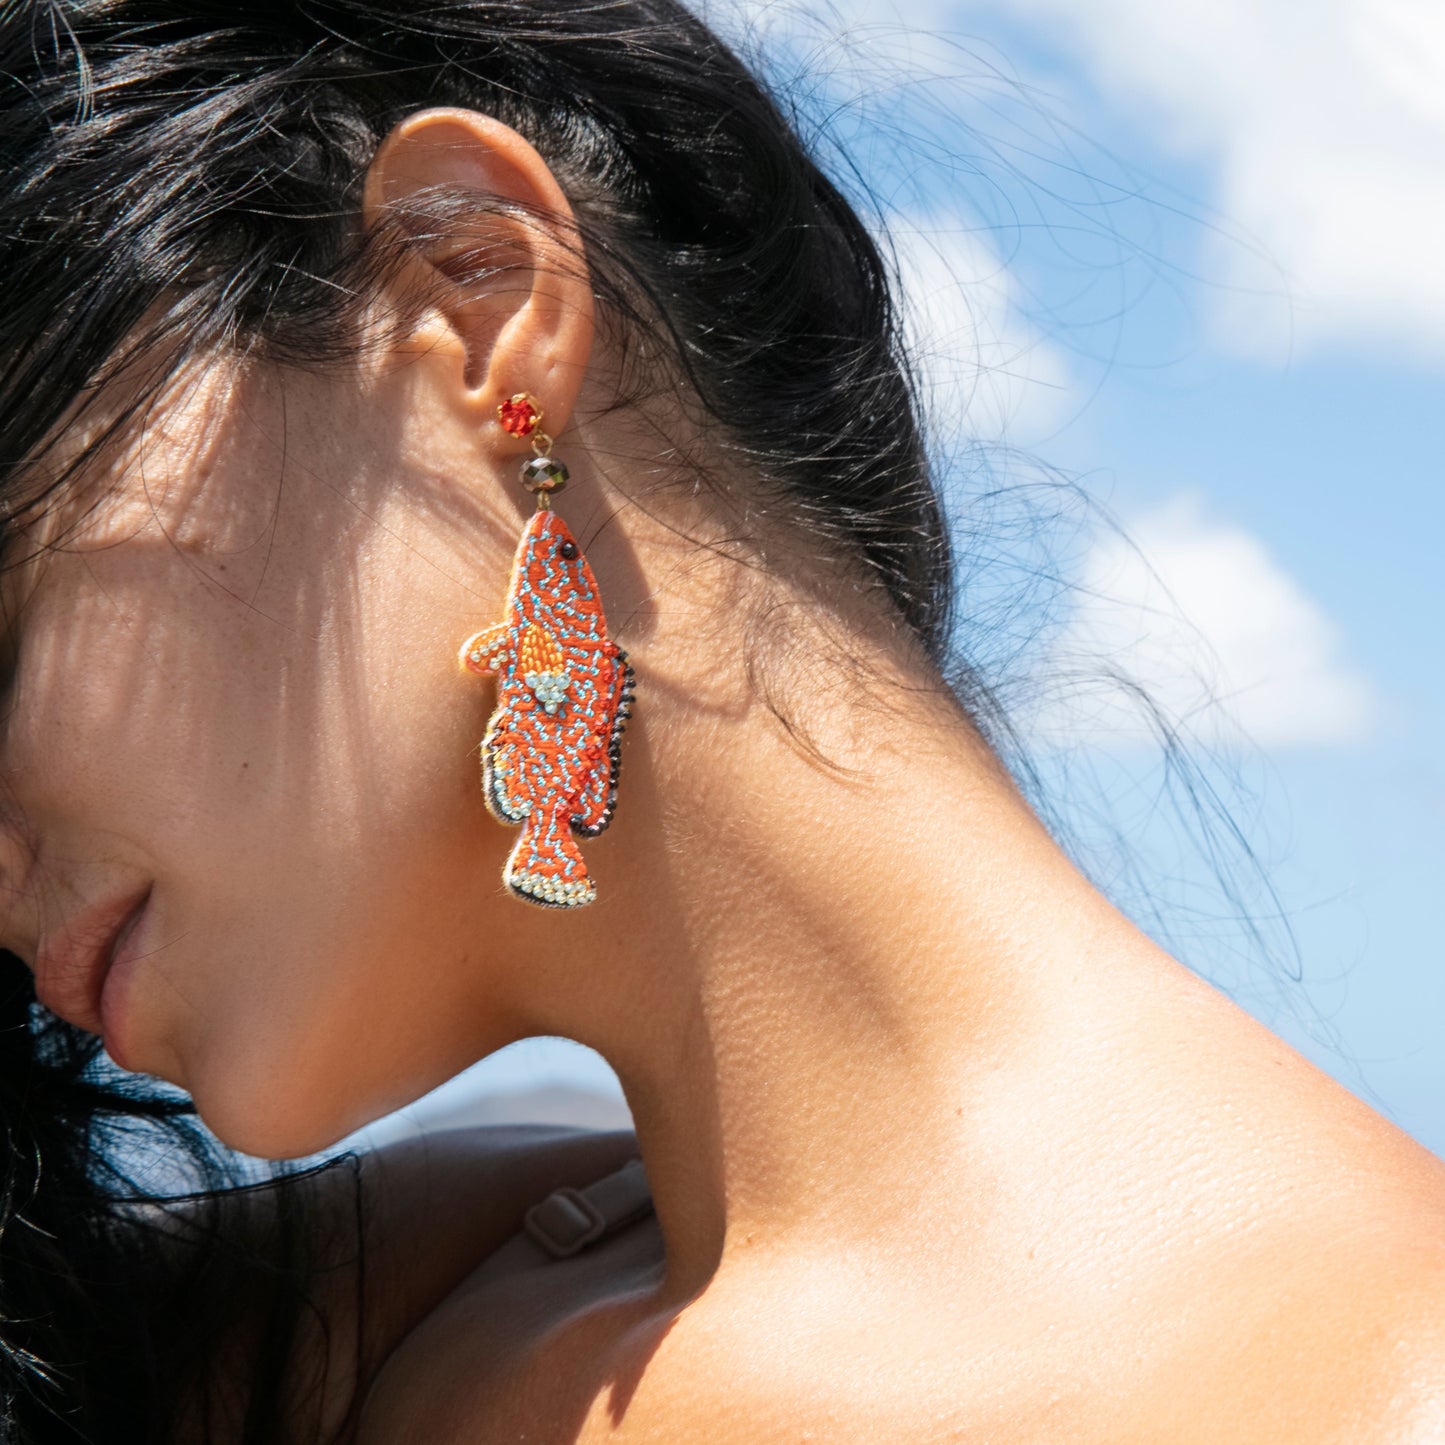 Fish embroid earrings